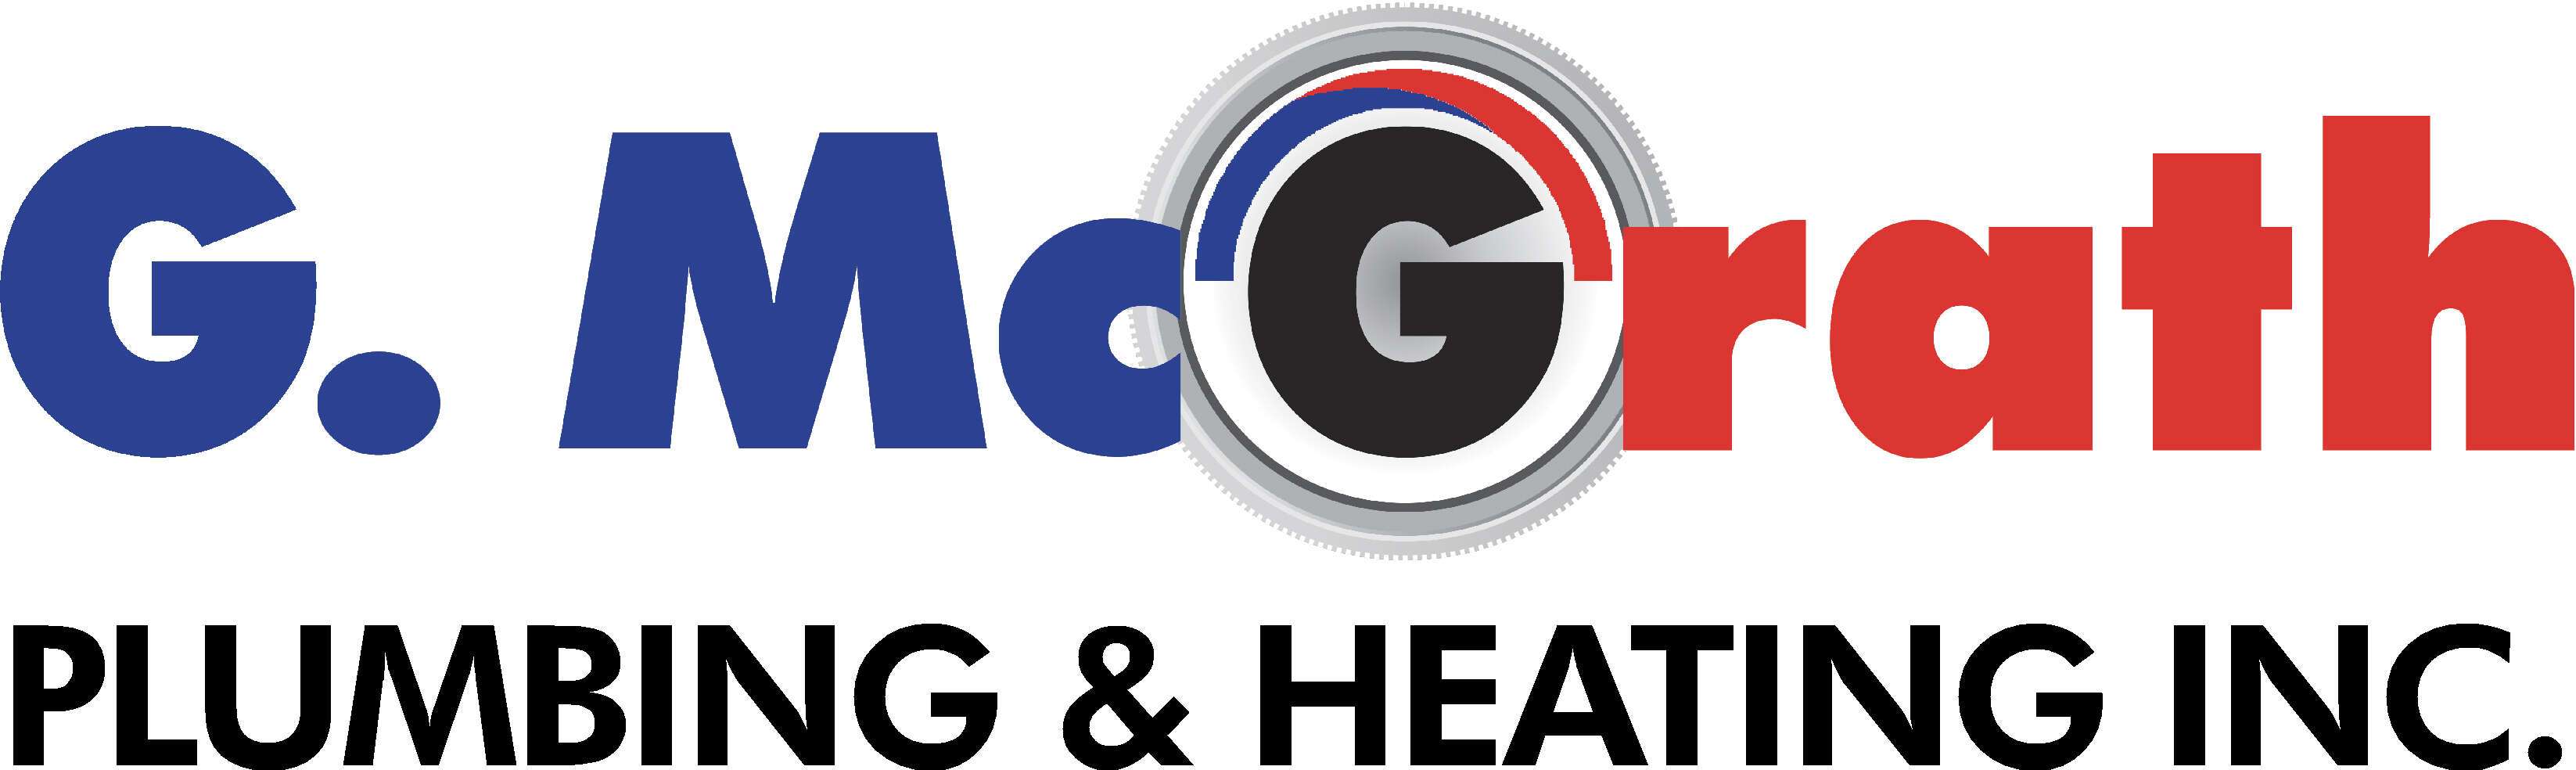 G. McGrath Plumbing & Heating